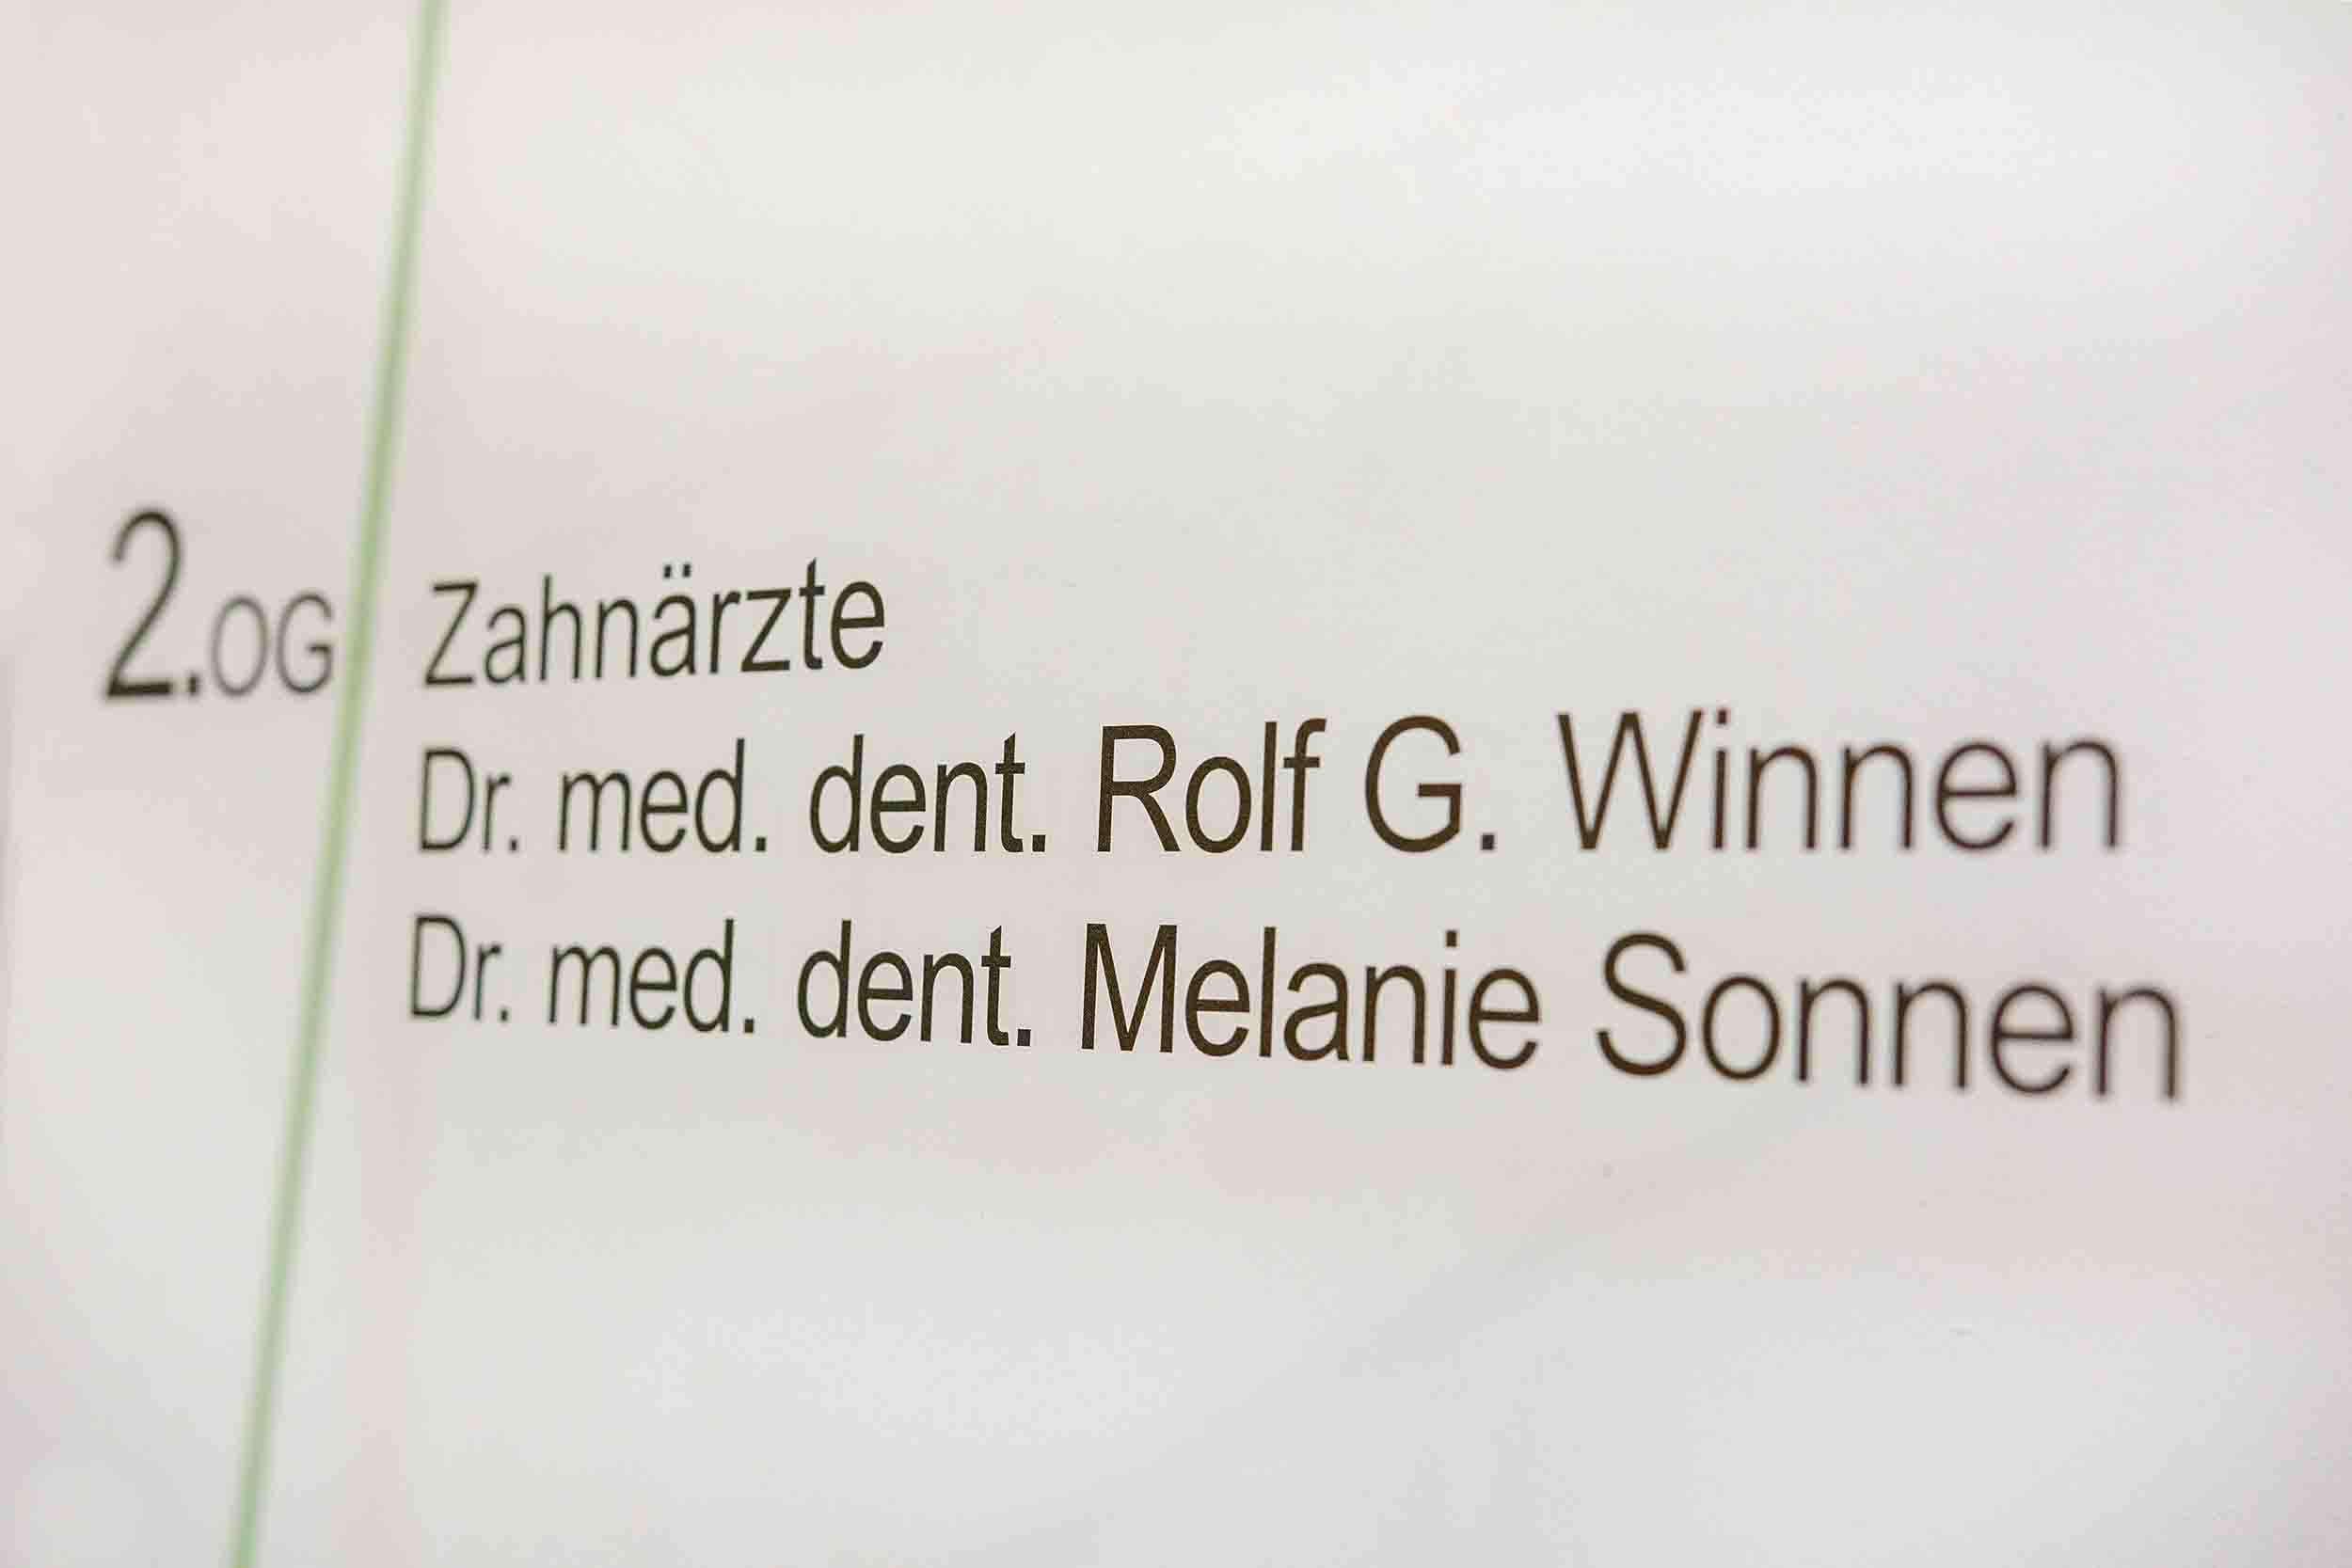 Zahnarzt am Kirchplatz Düsseldorf | Dr. Winnen, Dr. Sonnen, ZÄ Tillmann, Fürstenwall 146 in Düsseldorf